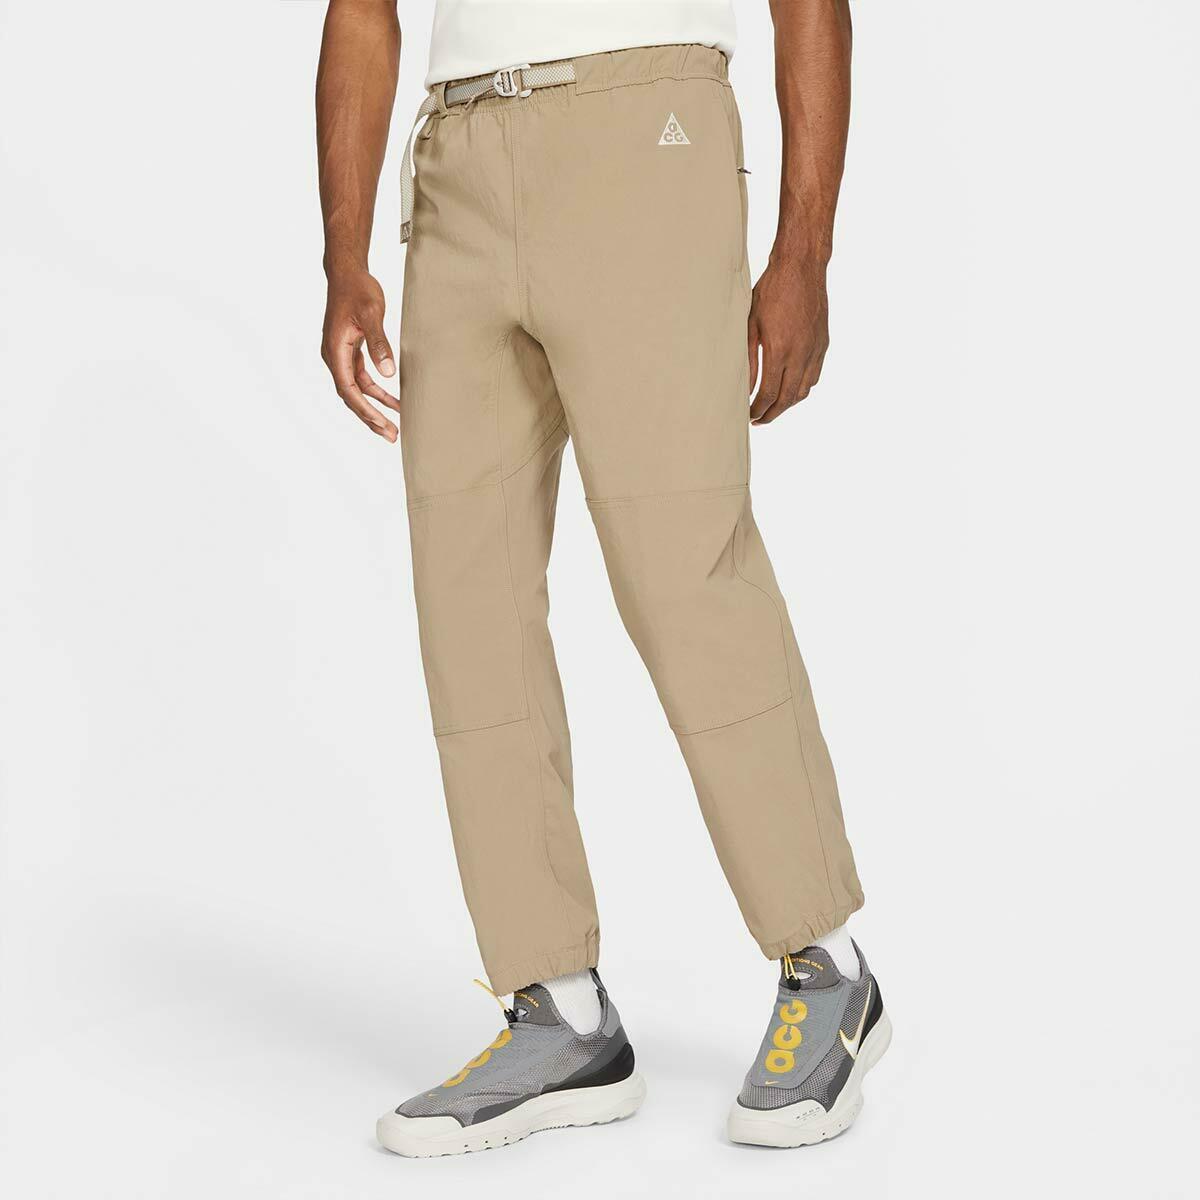 Nike Acg Tech Men`s Pants Assorted Sizes Neww CV0660 247 - Beige